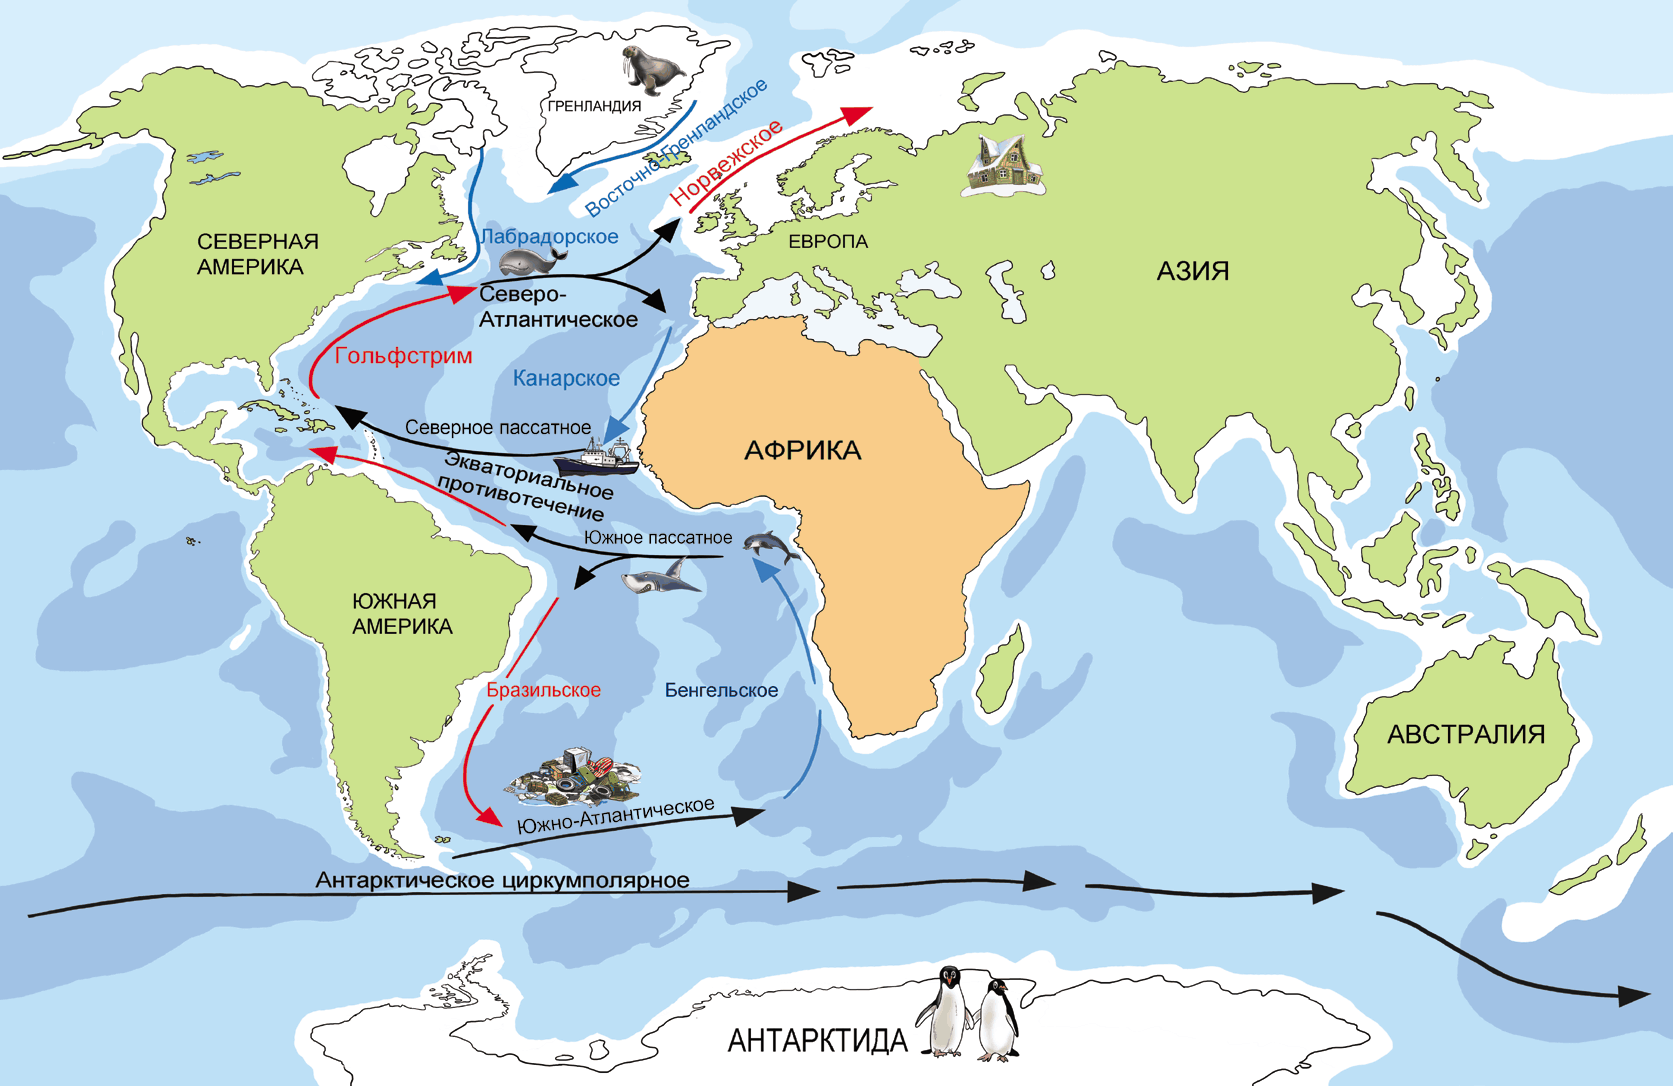 Гольфстрим на карте Атлантического океана. Северо-атлантическое течение на карте. Гольфстрим в Атлантическом океане. Карта течений Атлантического океана. Течение вод атлантического океана